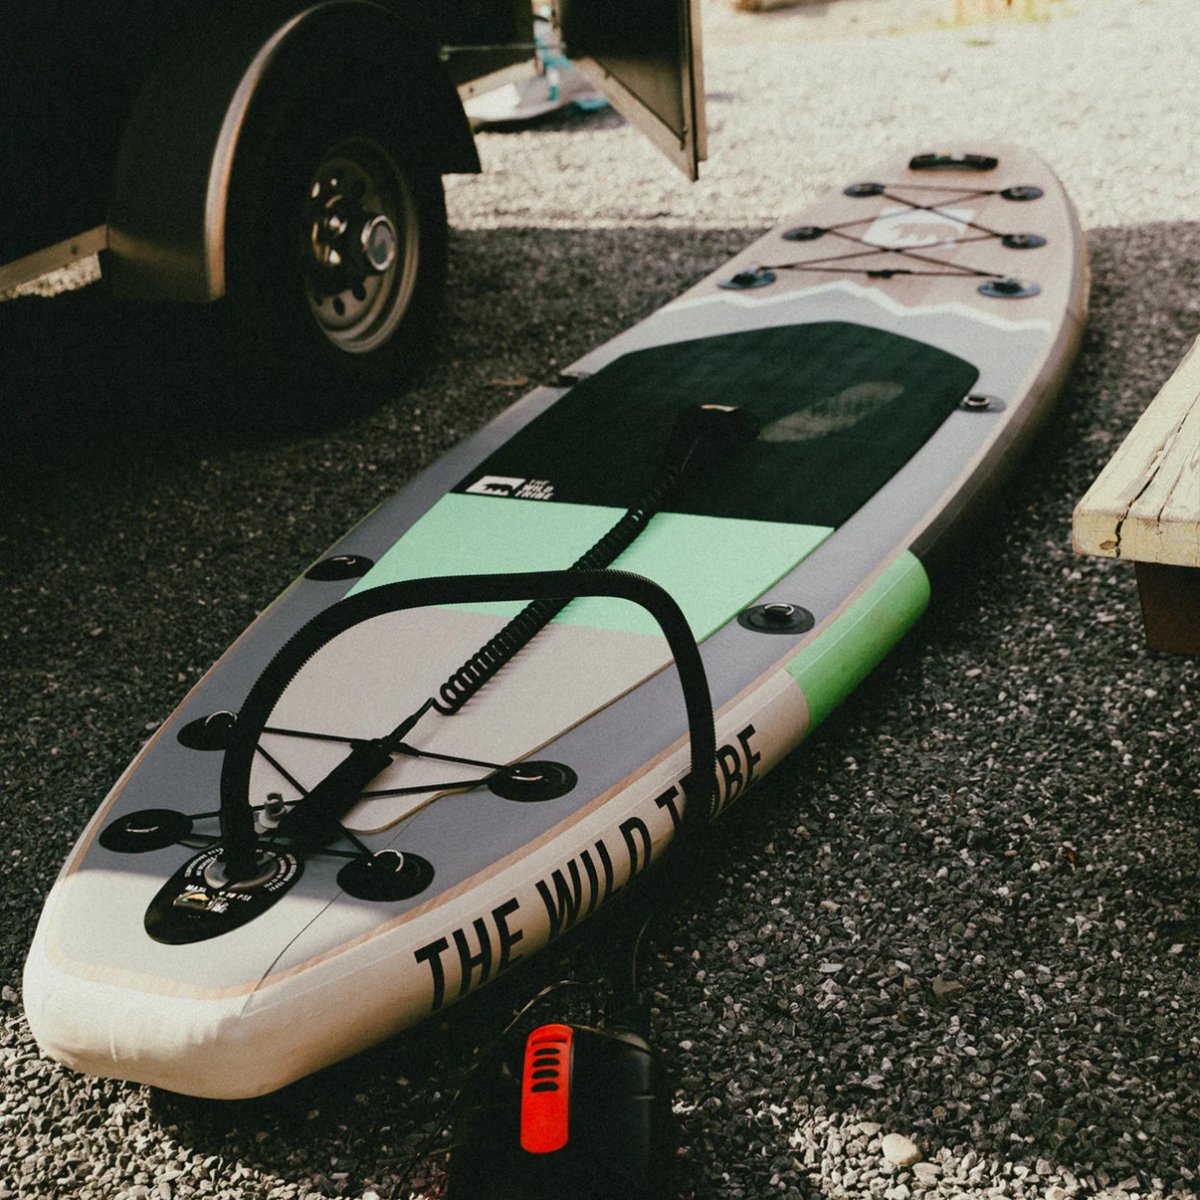 Peyto Seafoam 11 (2024): All-Around 11' Premium Inflatable Paddleboard - The Wild Tribe